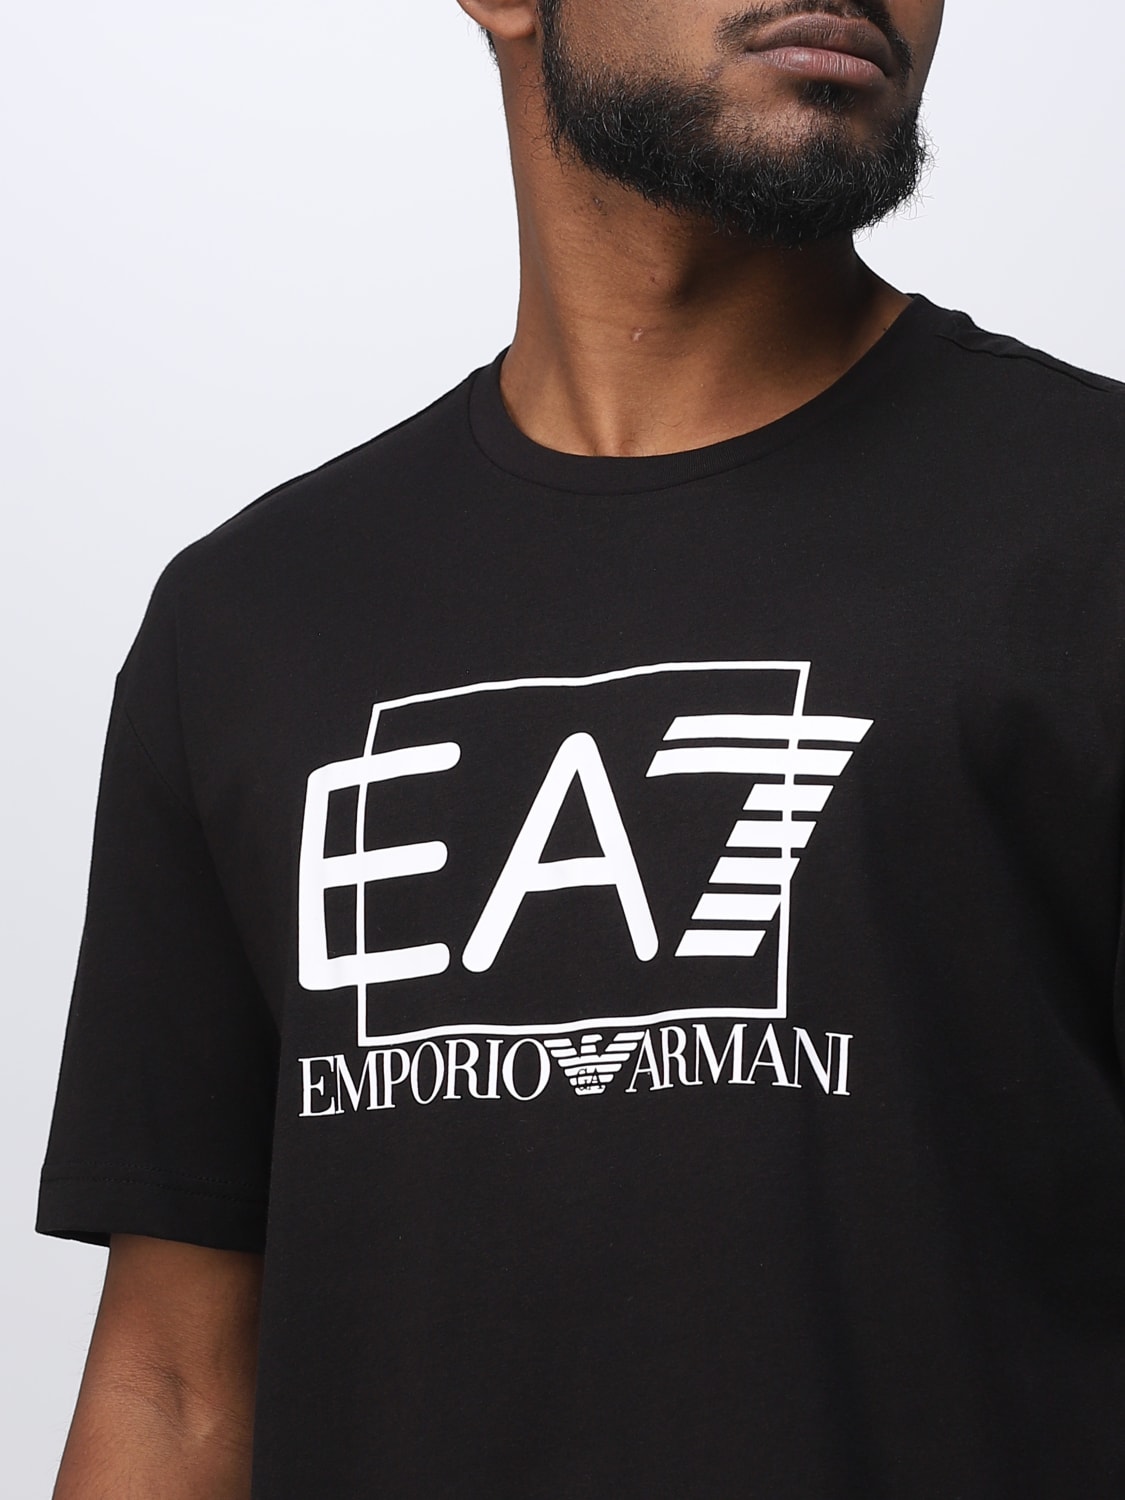 EA7: t-shirt for man - Black | Ea7 t-shirt 3RPT09PJ02Z online on GIGLIO.COM